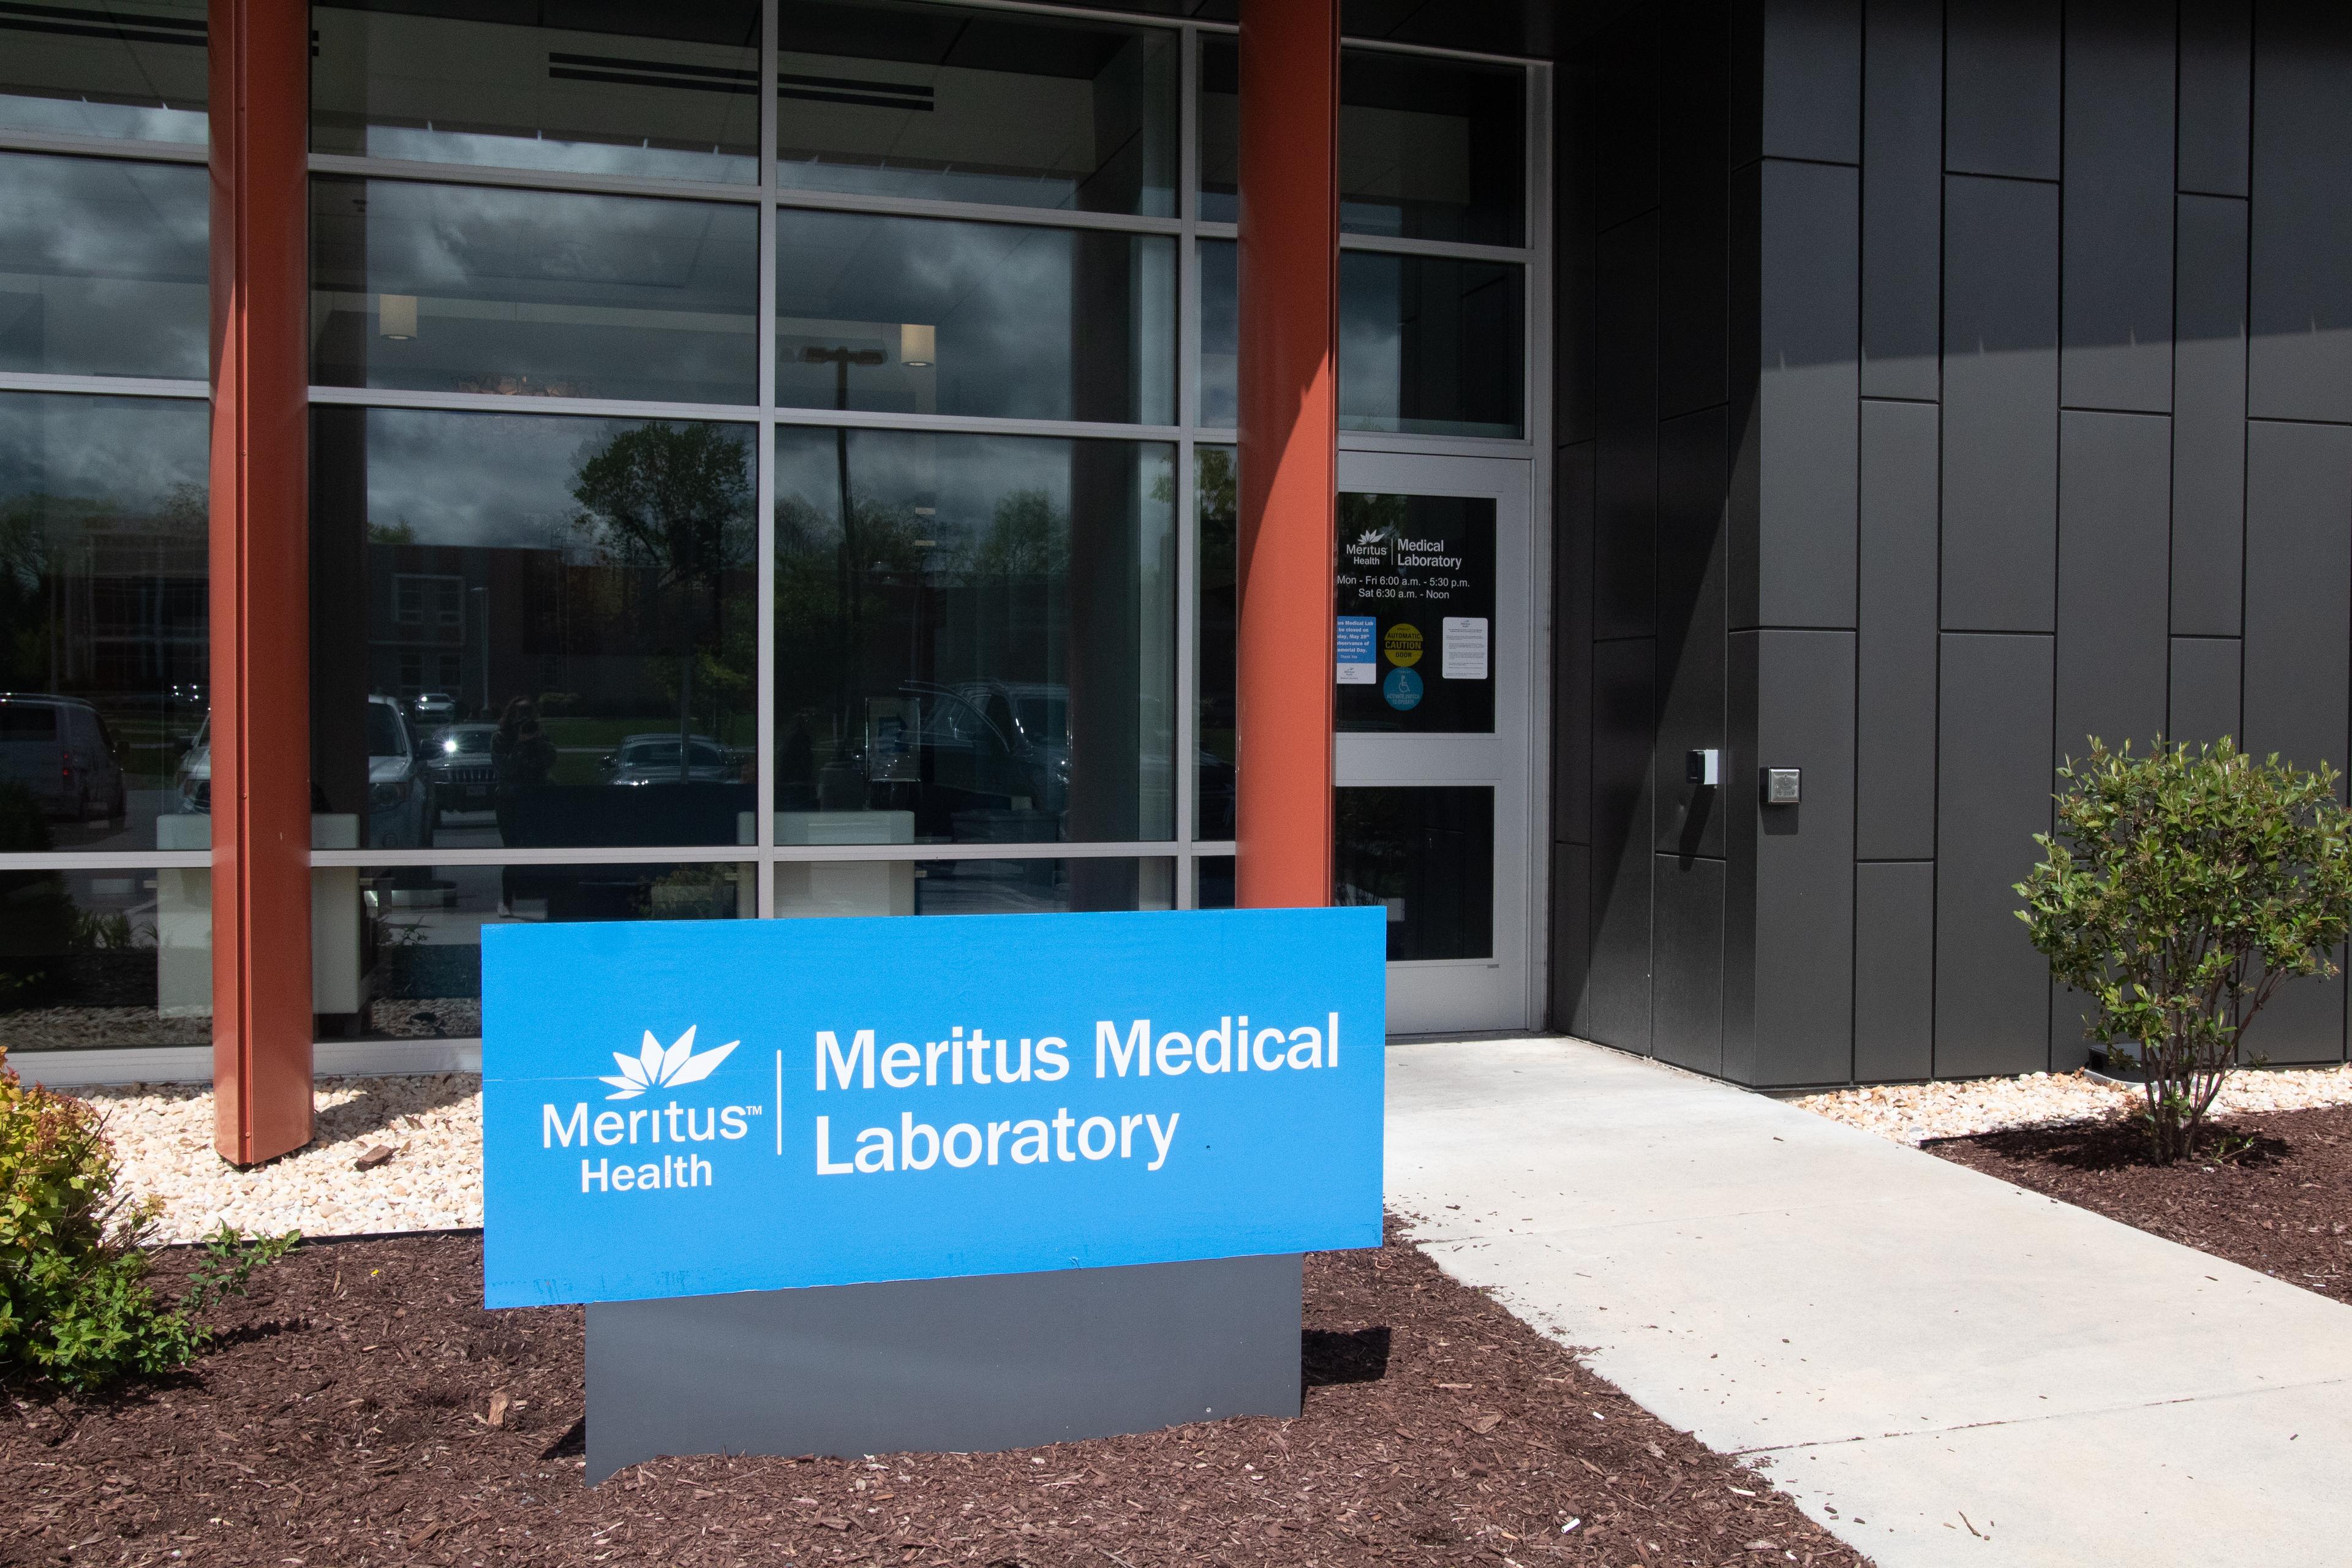 Meritus Medical Laboratory - Meritus Medical Plaza, Hagerstown